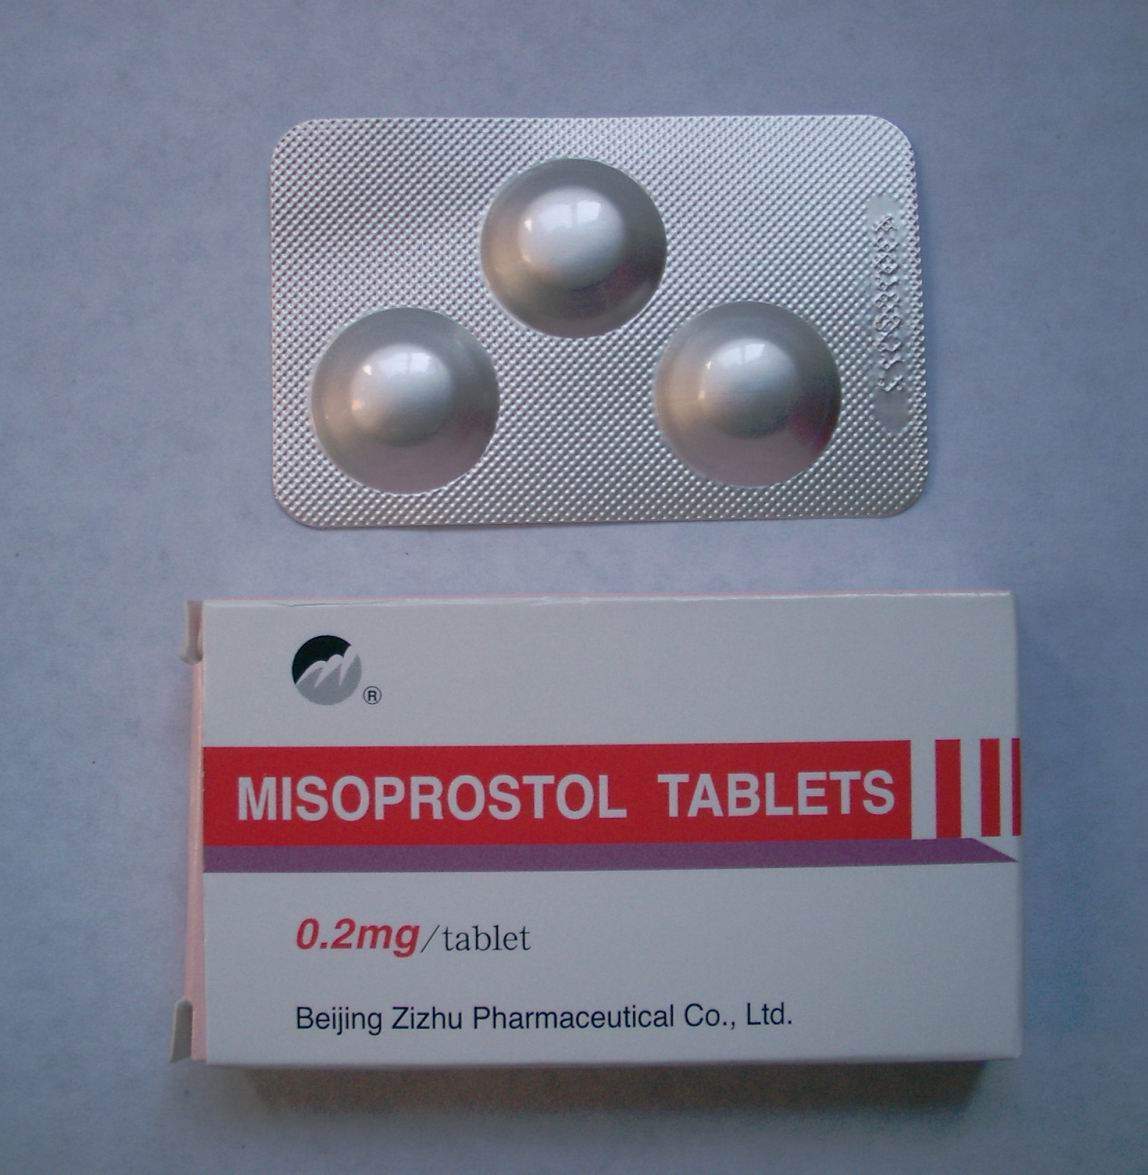 Телефон купить таблетки. Mifepristone-200mg. Таблетки от выкидыша. Мизопростол. Недорогие таблетки для выкидыша.